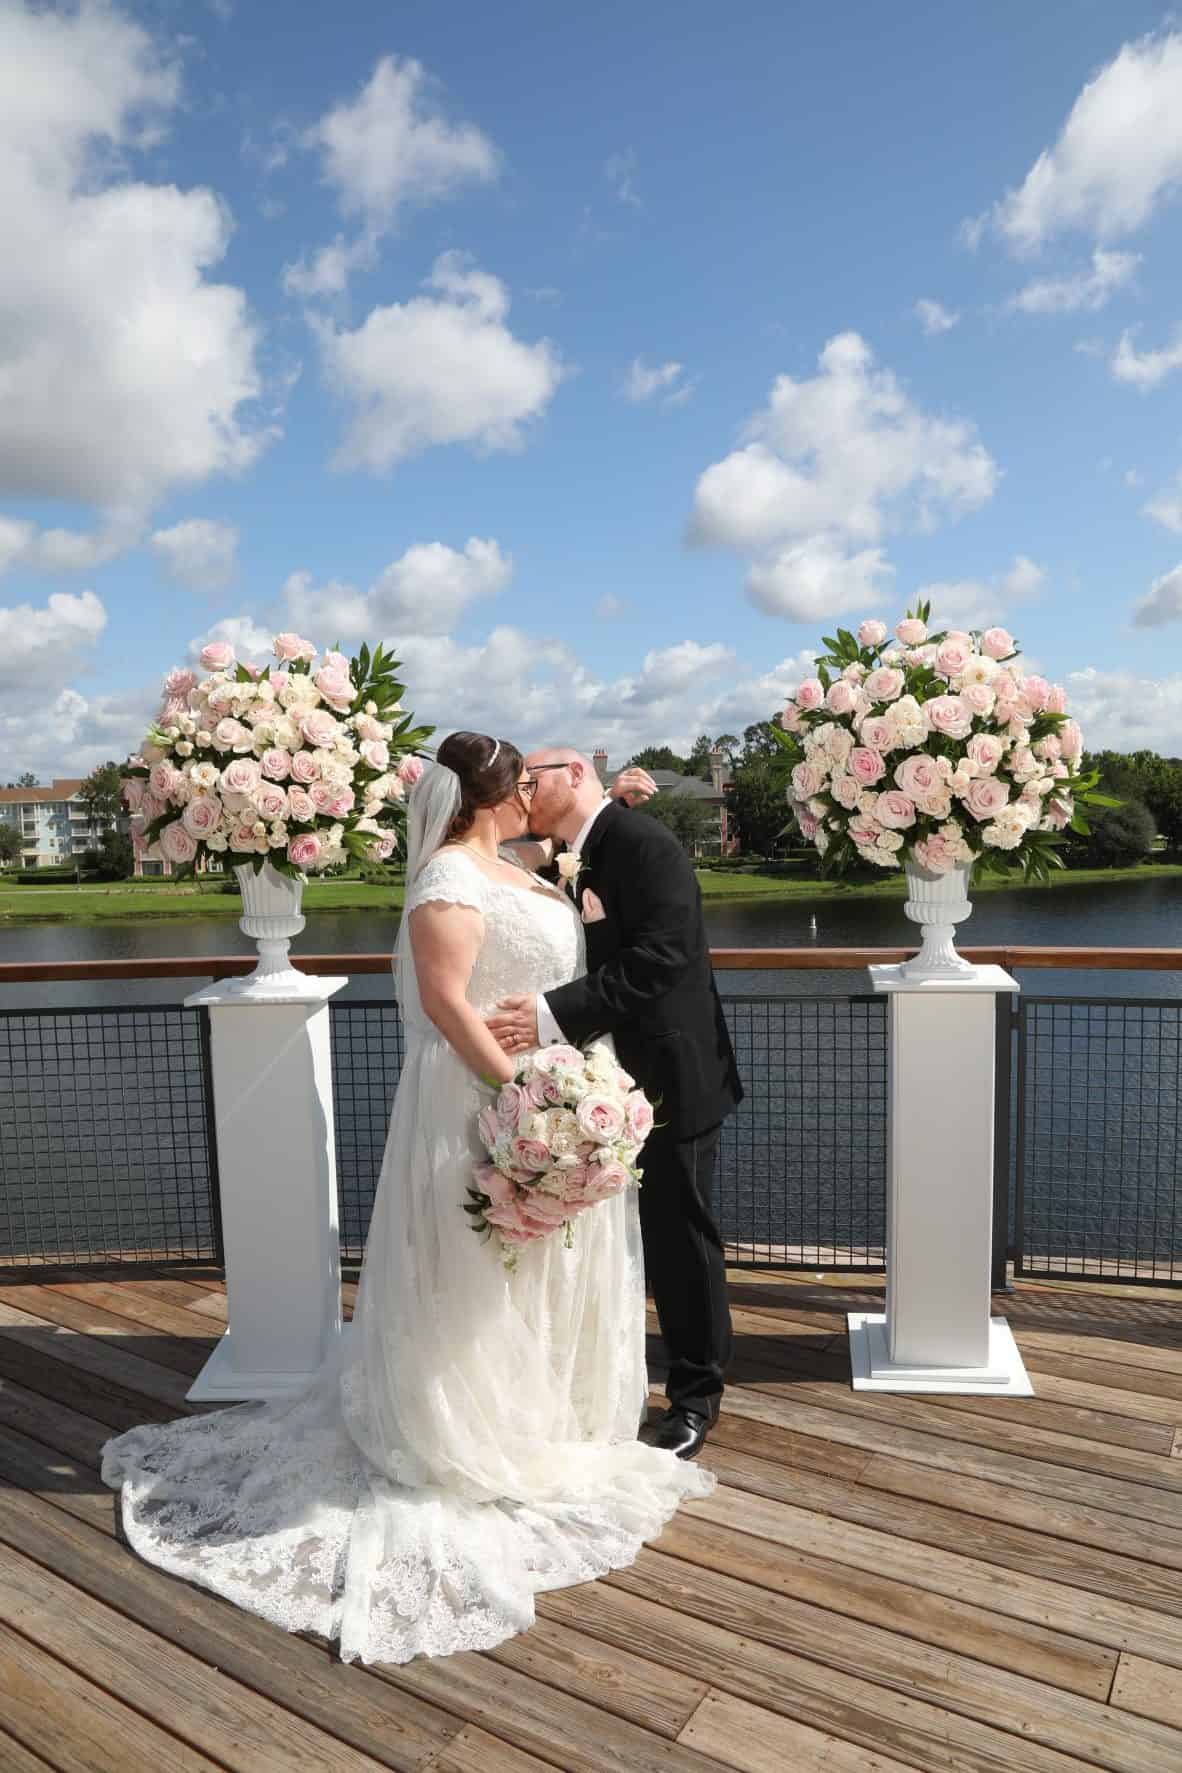 Outdoor Ceremony - Just Marry Weddings - Chapman Photography - Ceremony